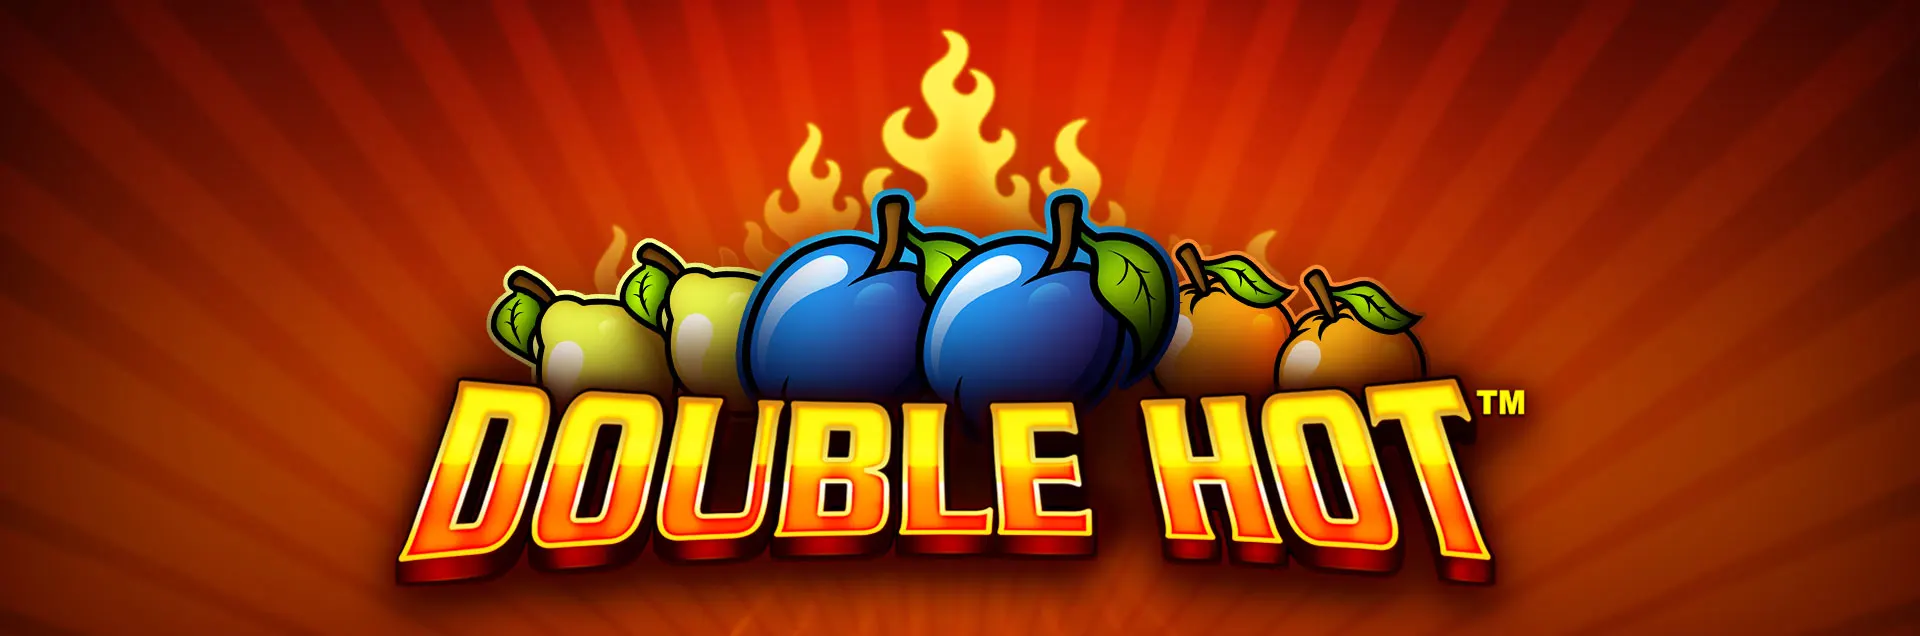 Double Hot